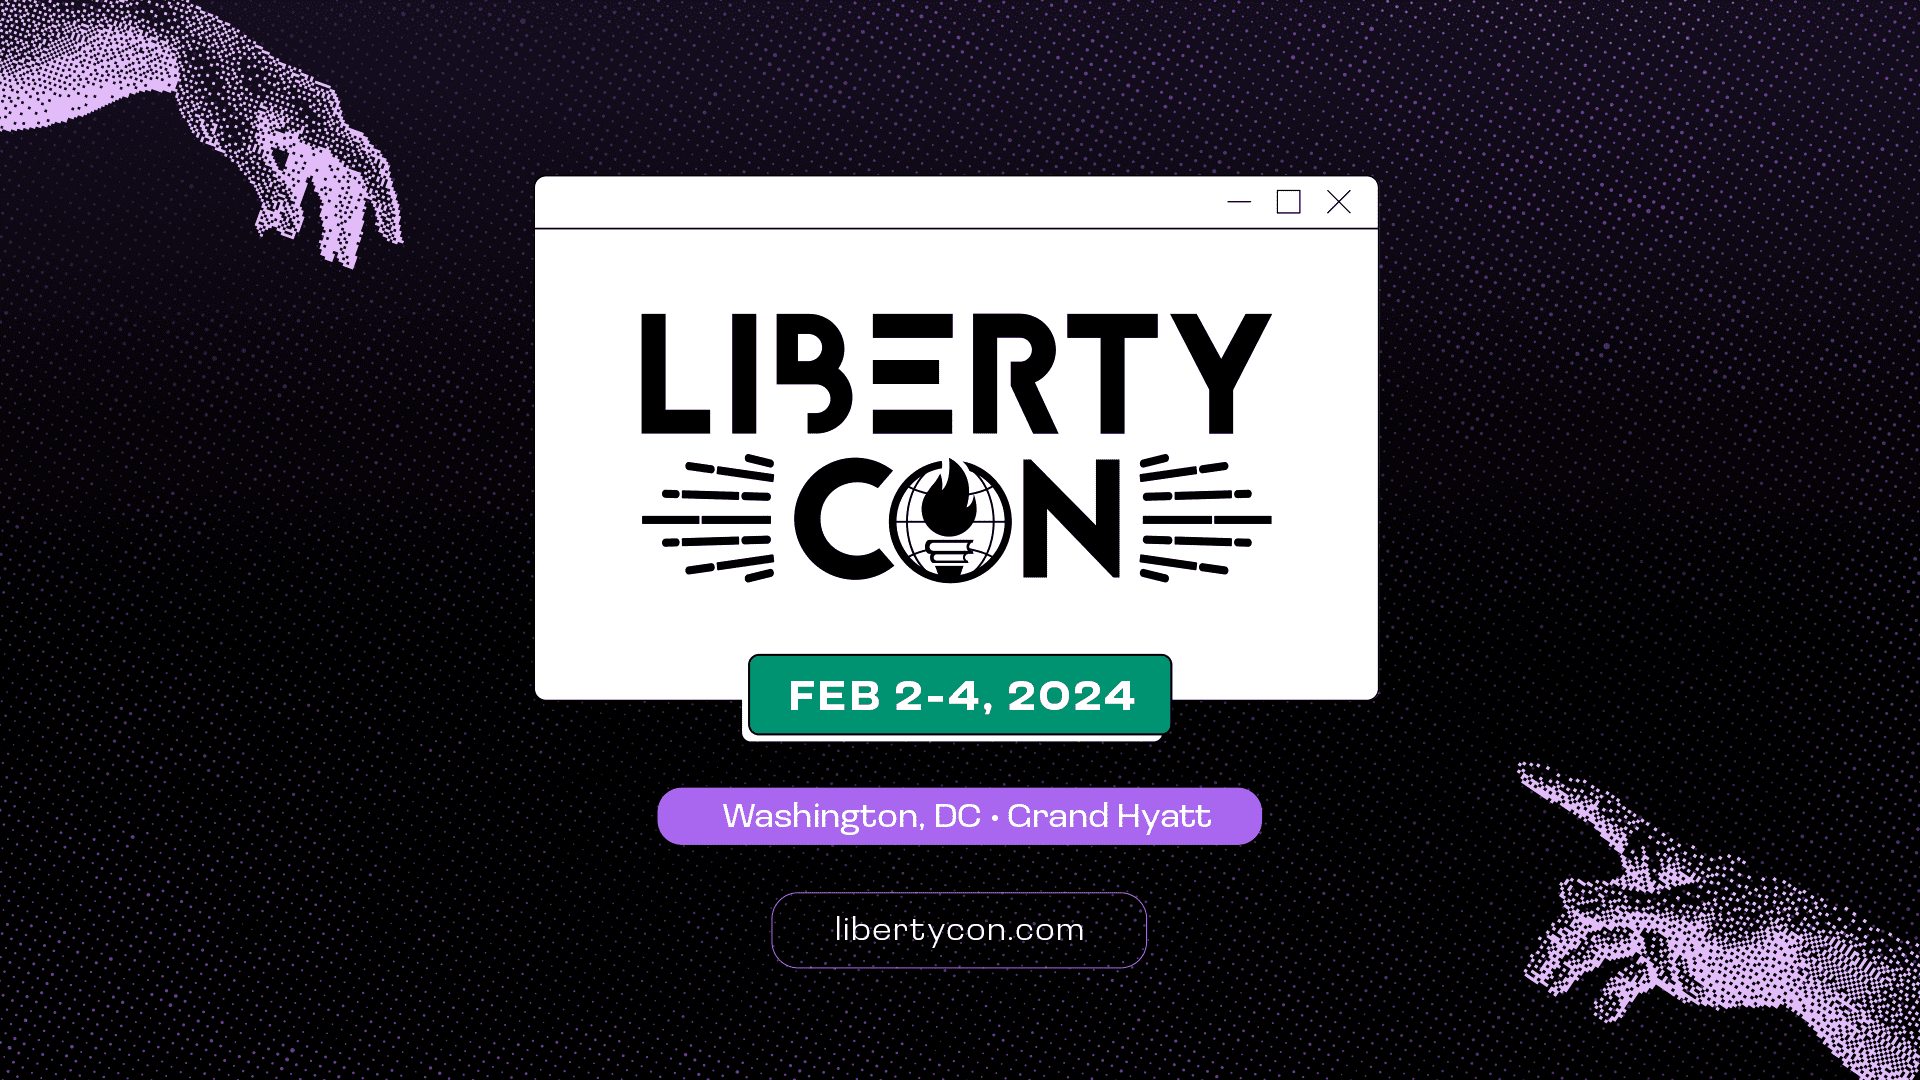 LibertyCon International will be held in Washington, D.C., on February 2-4, 2024